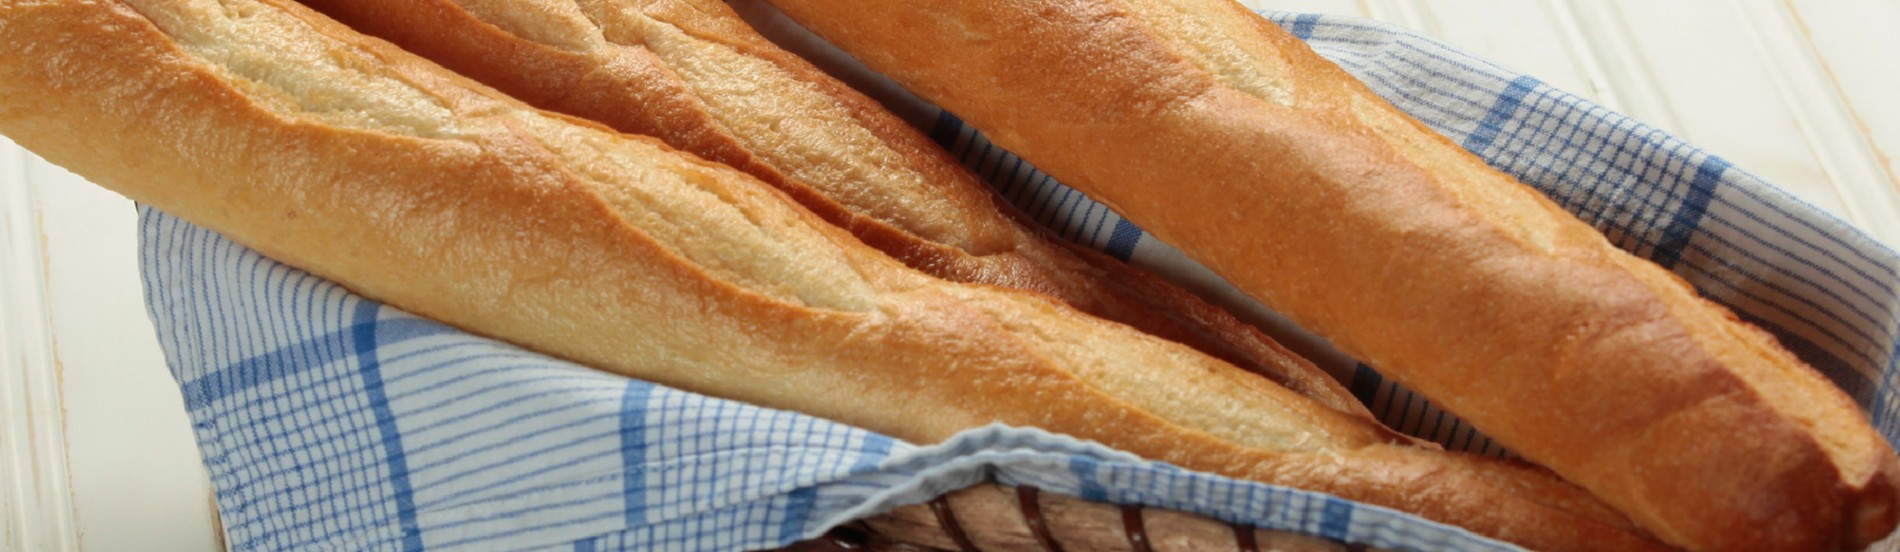 Request Your Free Sample - Olde Hearth Bread Company